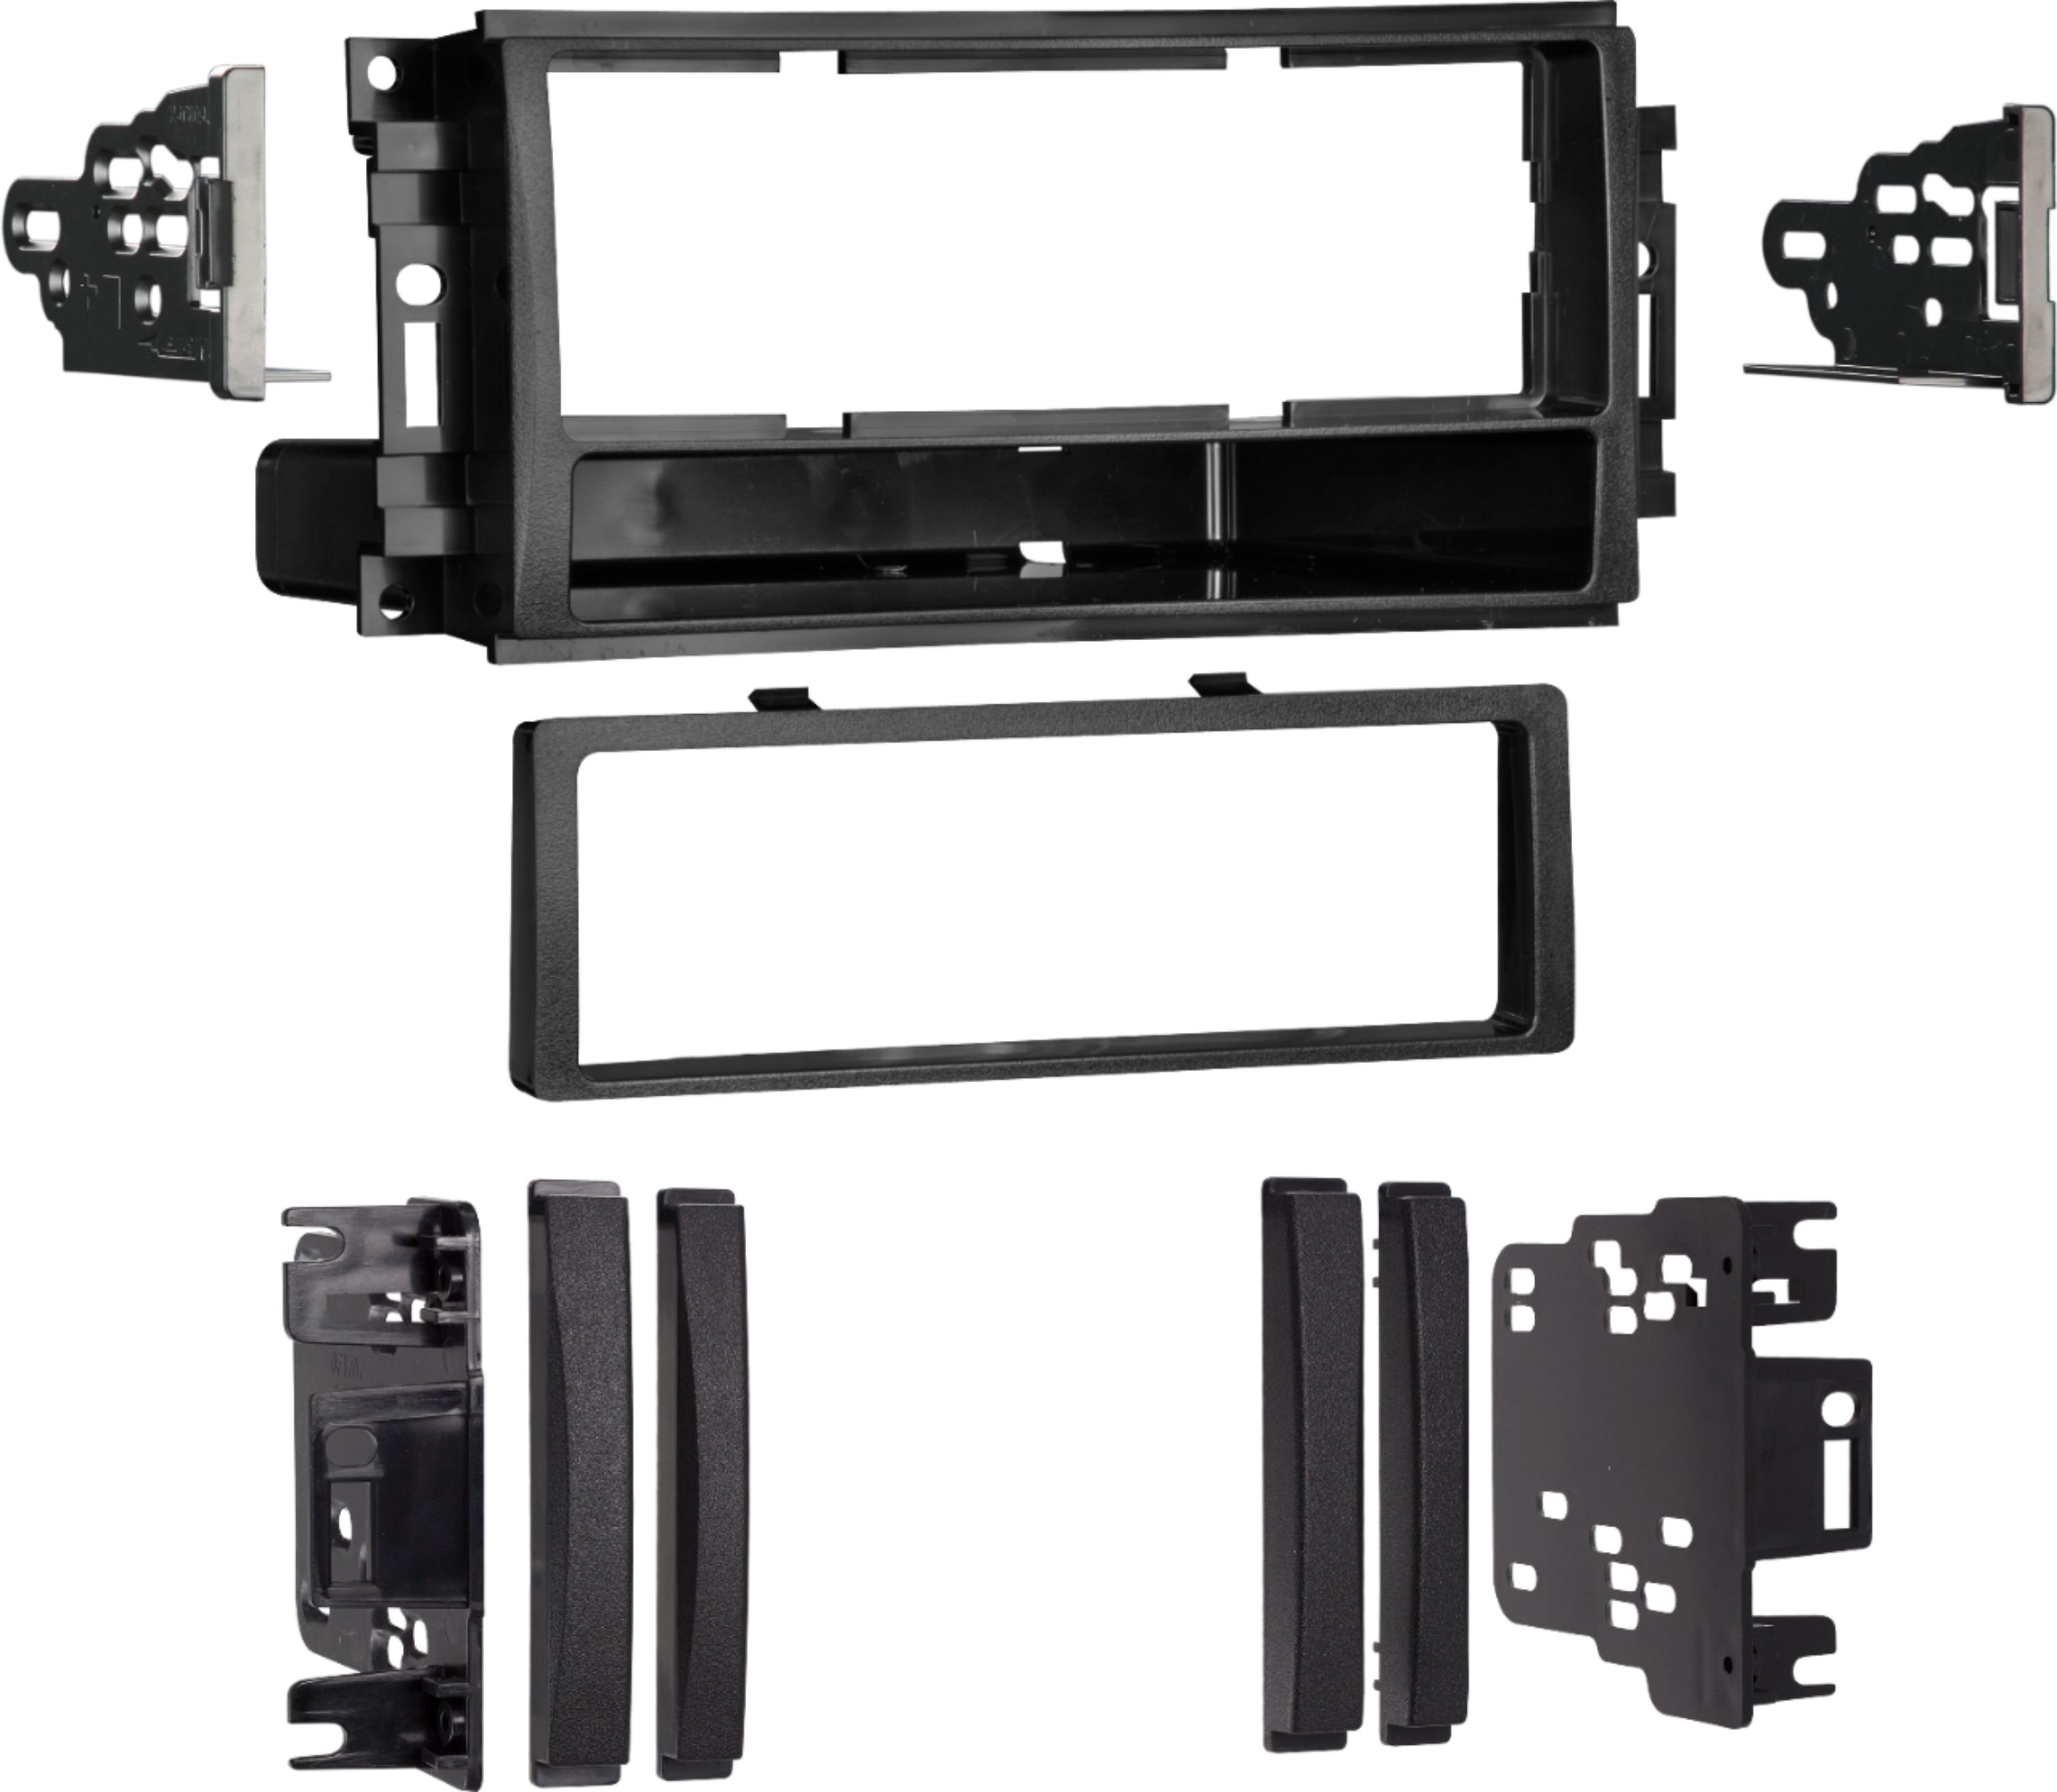 Metra - In-Dash Deck Installation Kit for 2007-2008 Chrysler/Dodge/Jeep Vehicle Models - Black